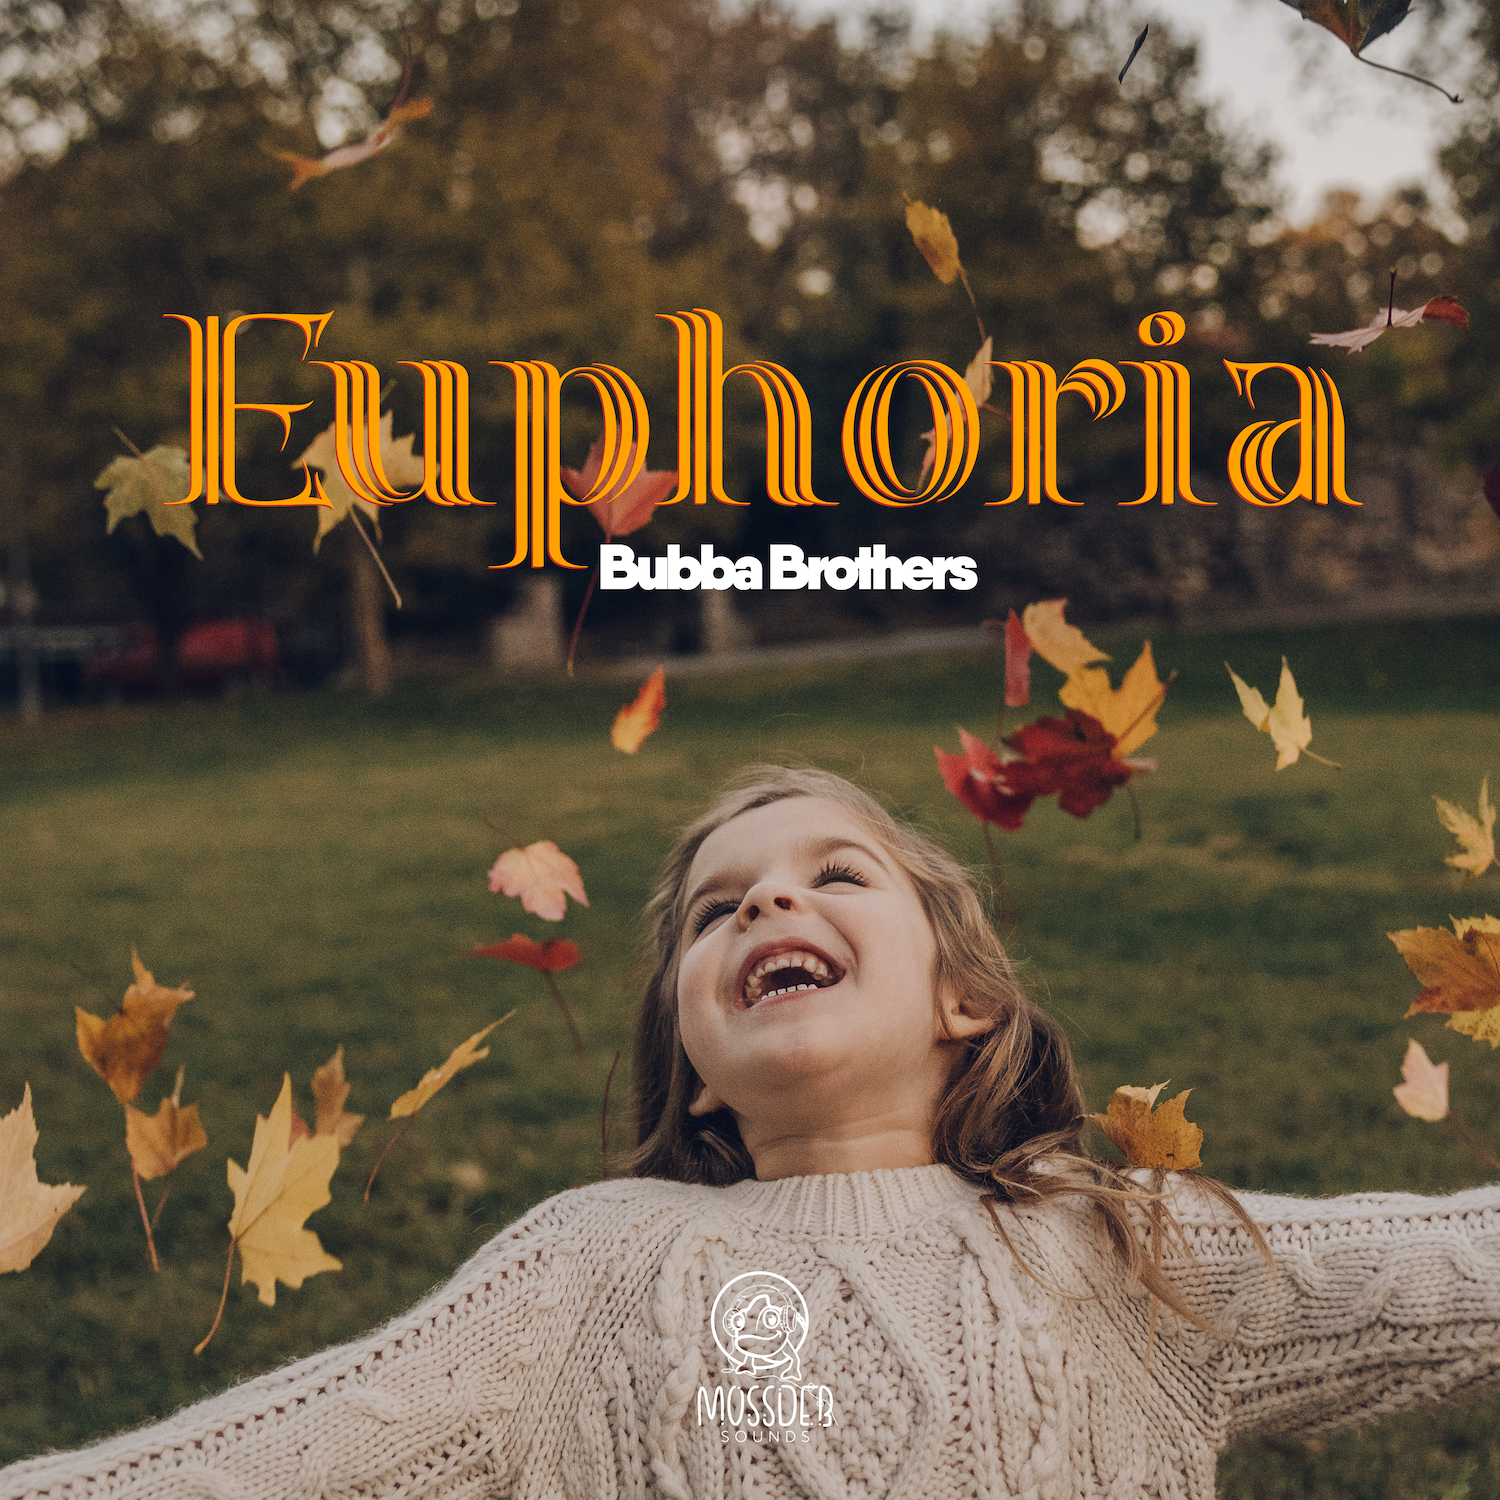 Bubba Brothers - Euphoria [Mossdeb Sounds]